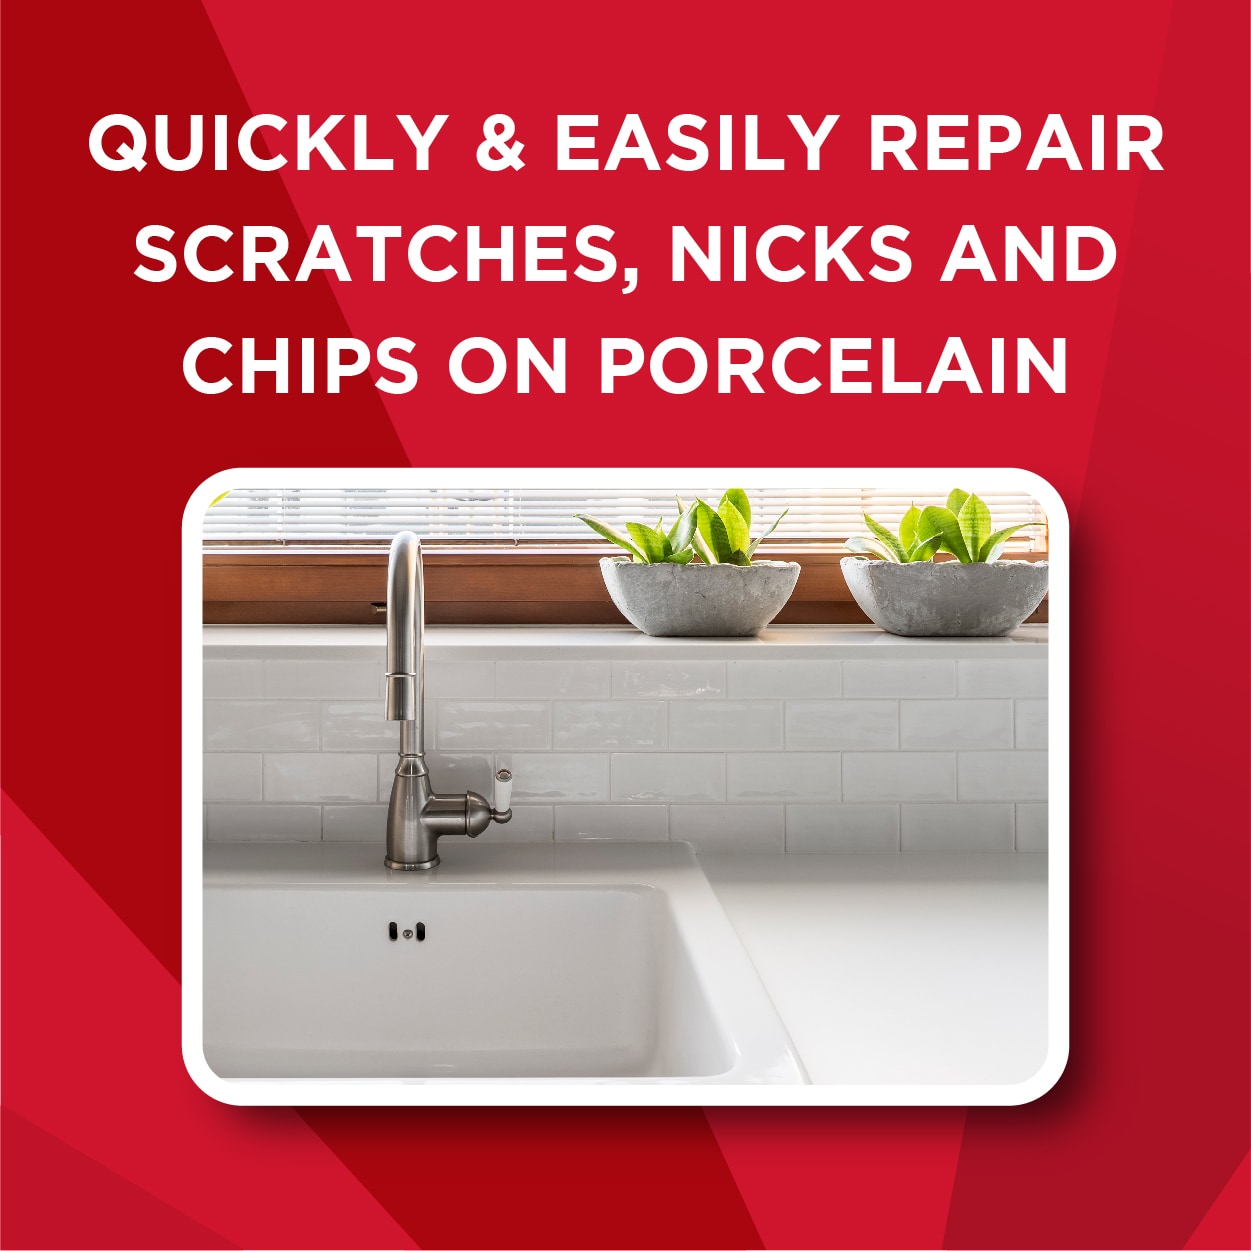 Sink, Tub, Tile & Toilet Chip and Crack Repair Kit - White SCA Paste